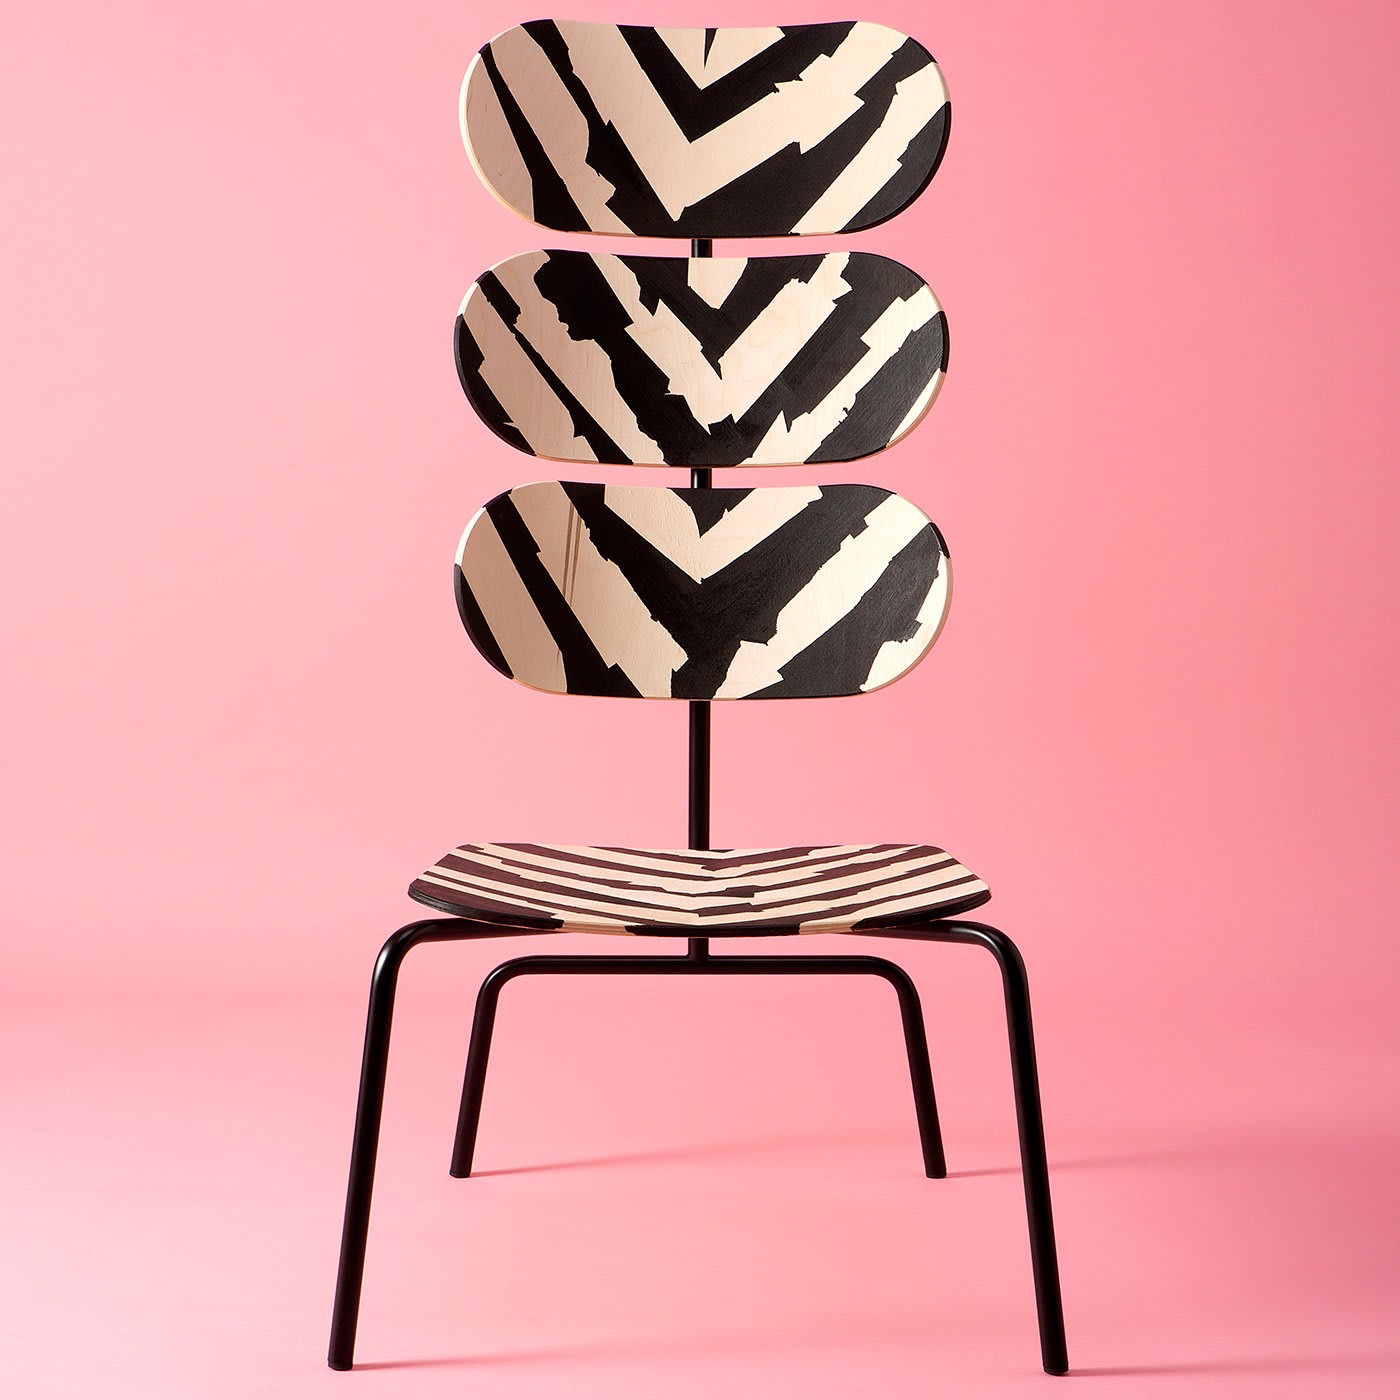 Lombrello Mackintosh Chair by Andrea Forapani and Tania Grace Knuckey - Lombrello